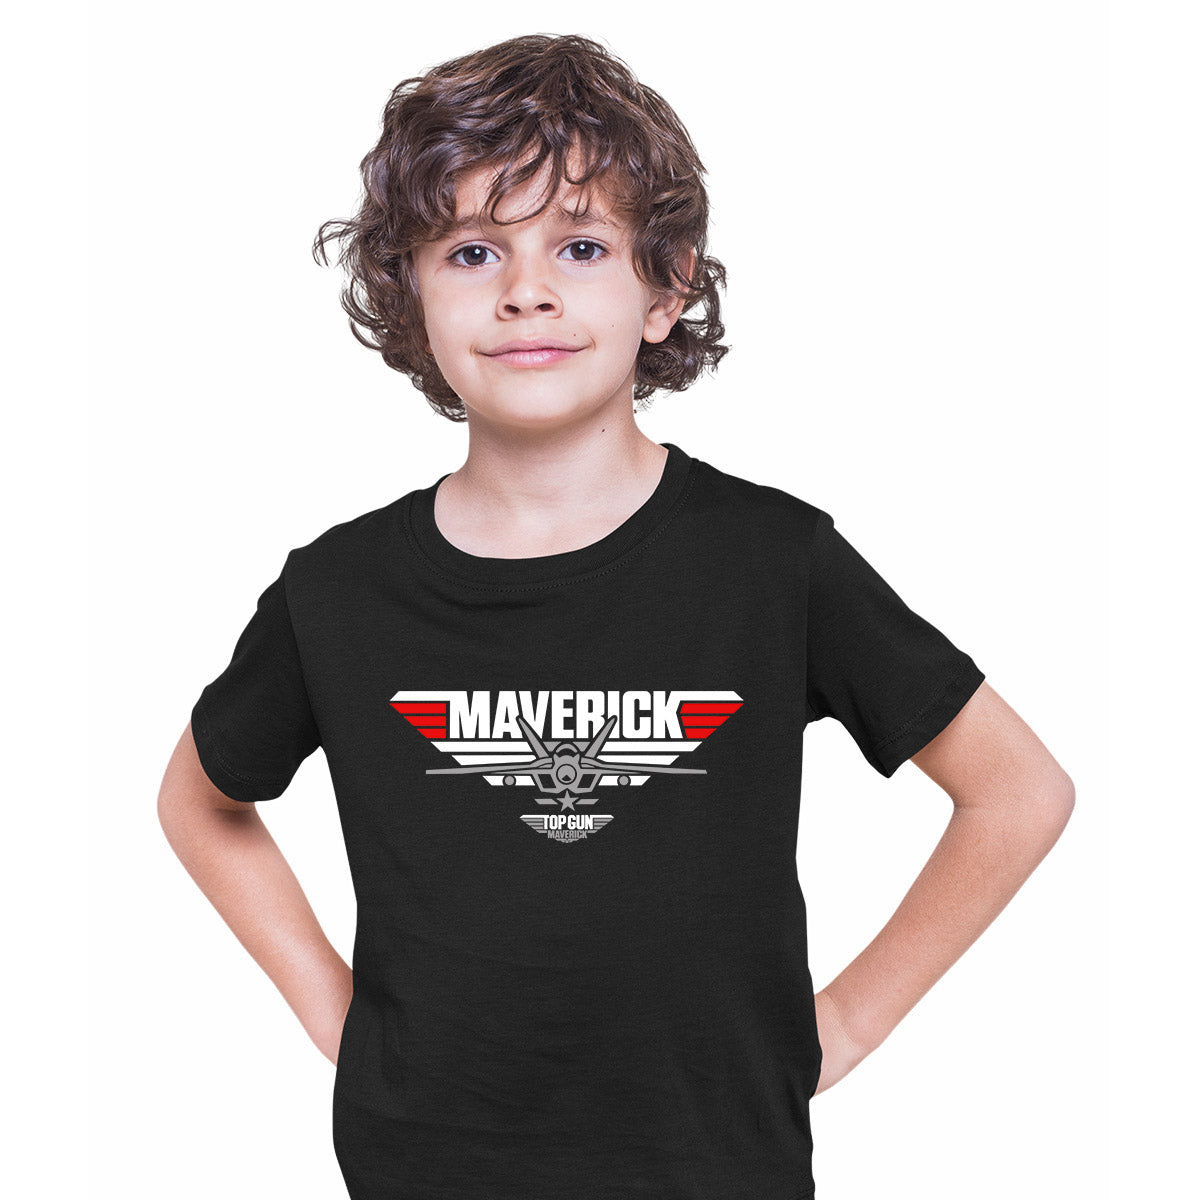 Top Gun Maverick Plane Logo T-shirt Movie Gift For Fan Kids T-shirt Black